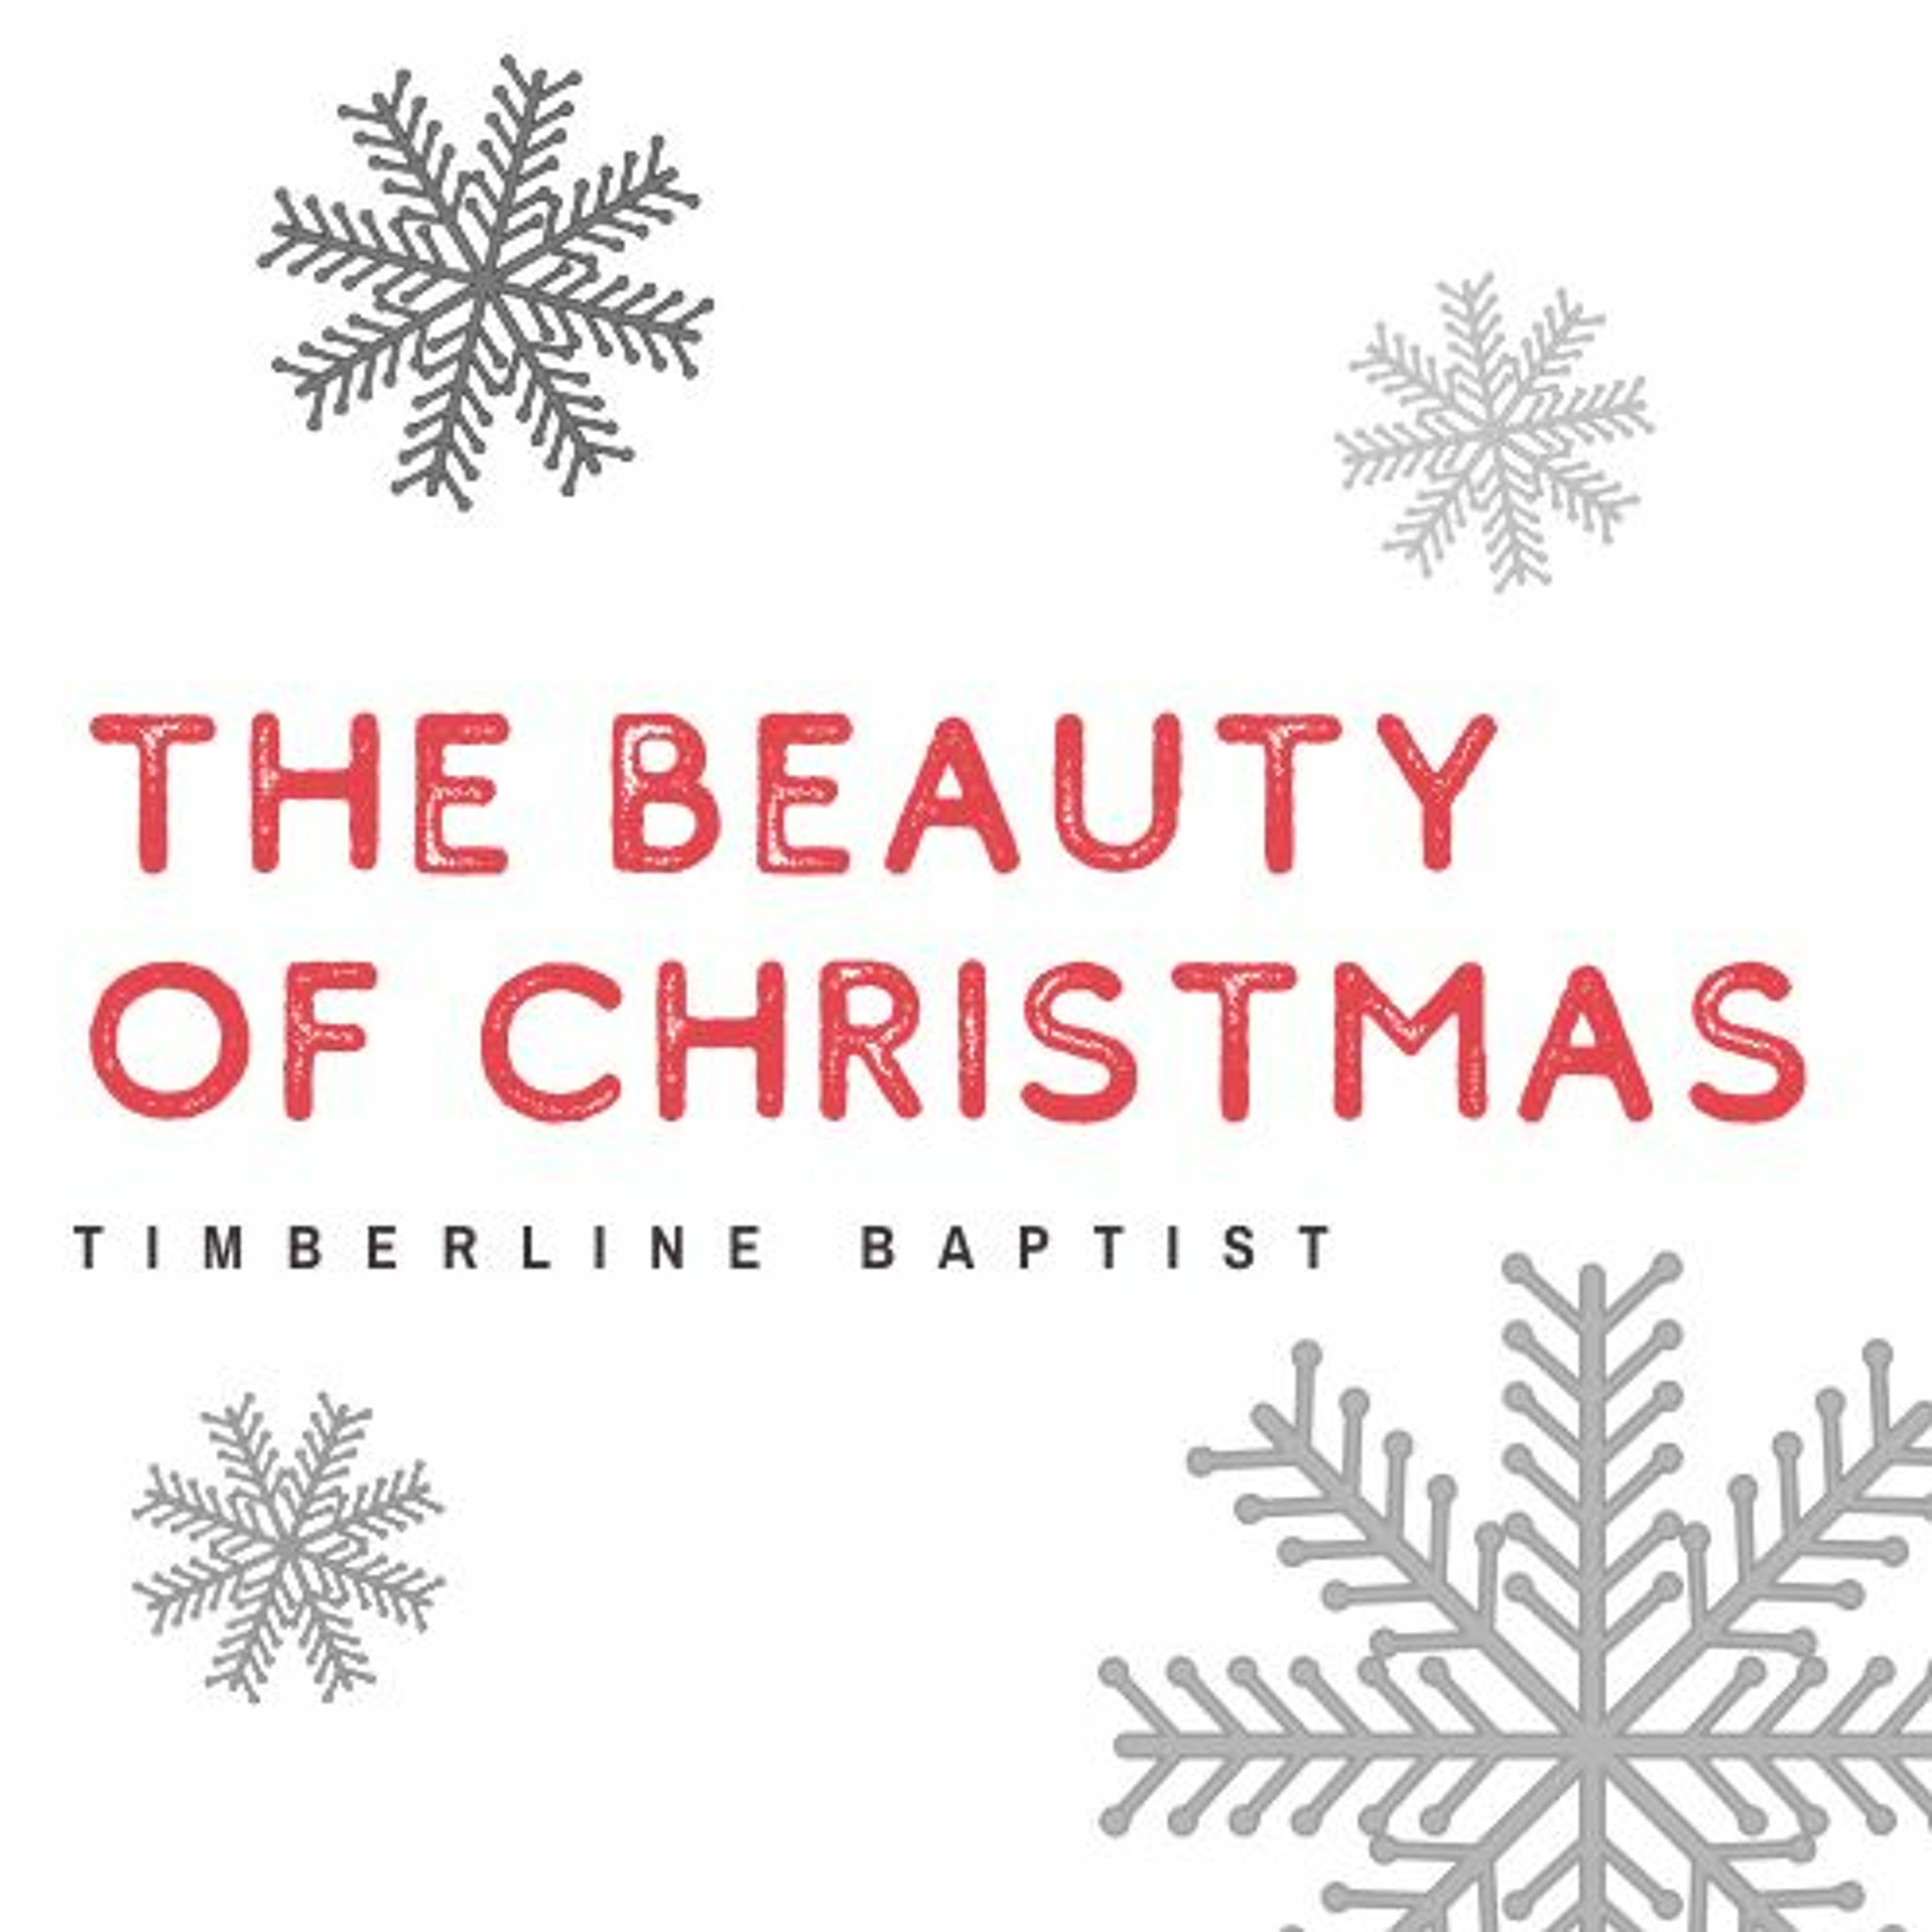 The Glory of Christmas (Luke 2:1-20)